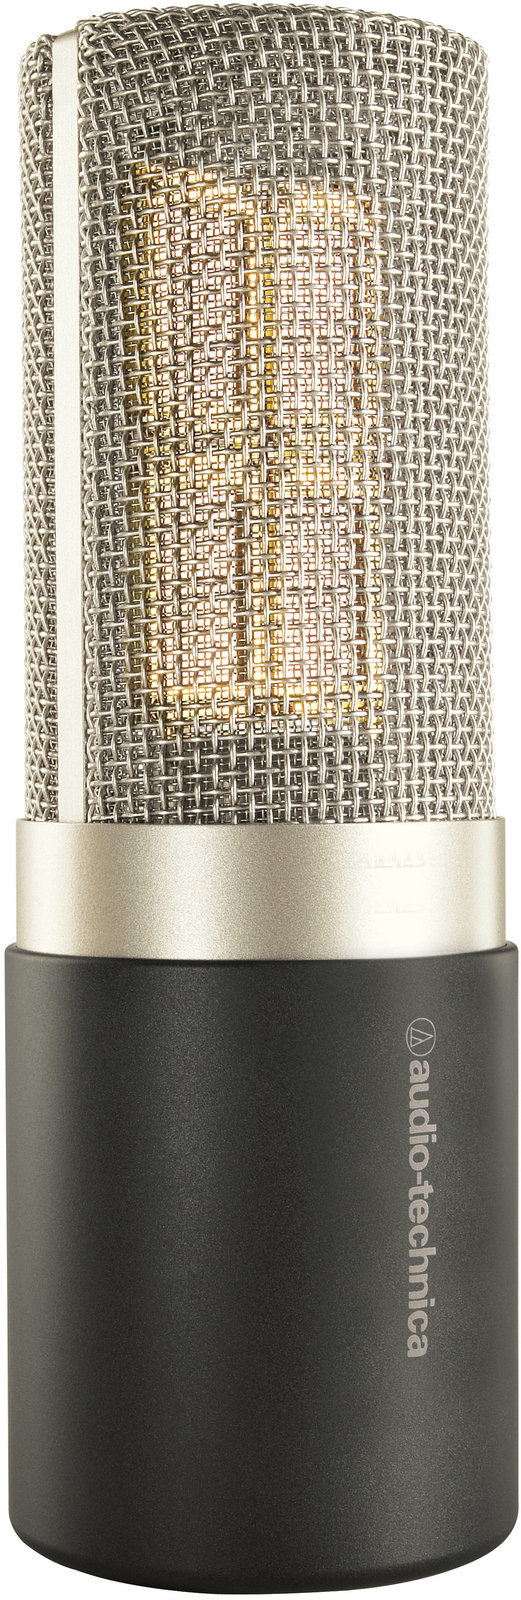 Studio Condenser Microphone Audio-Technica AT5040 Studio Condenser Microphone